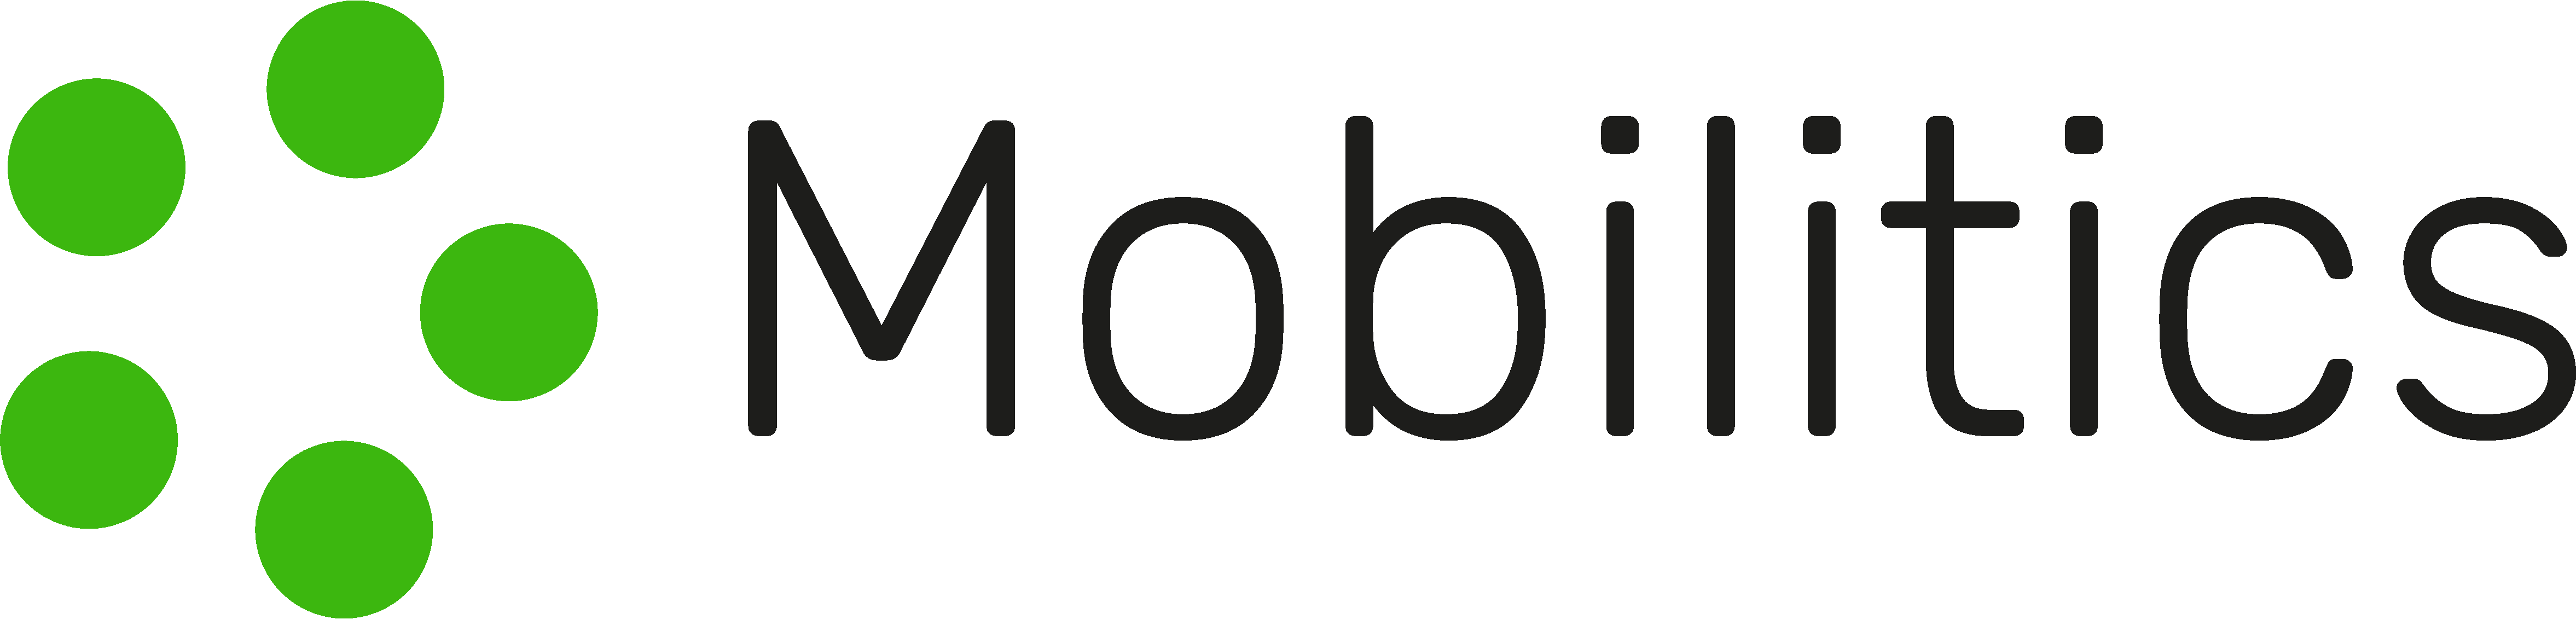 Mobilitics Logo Groen 